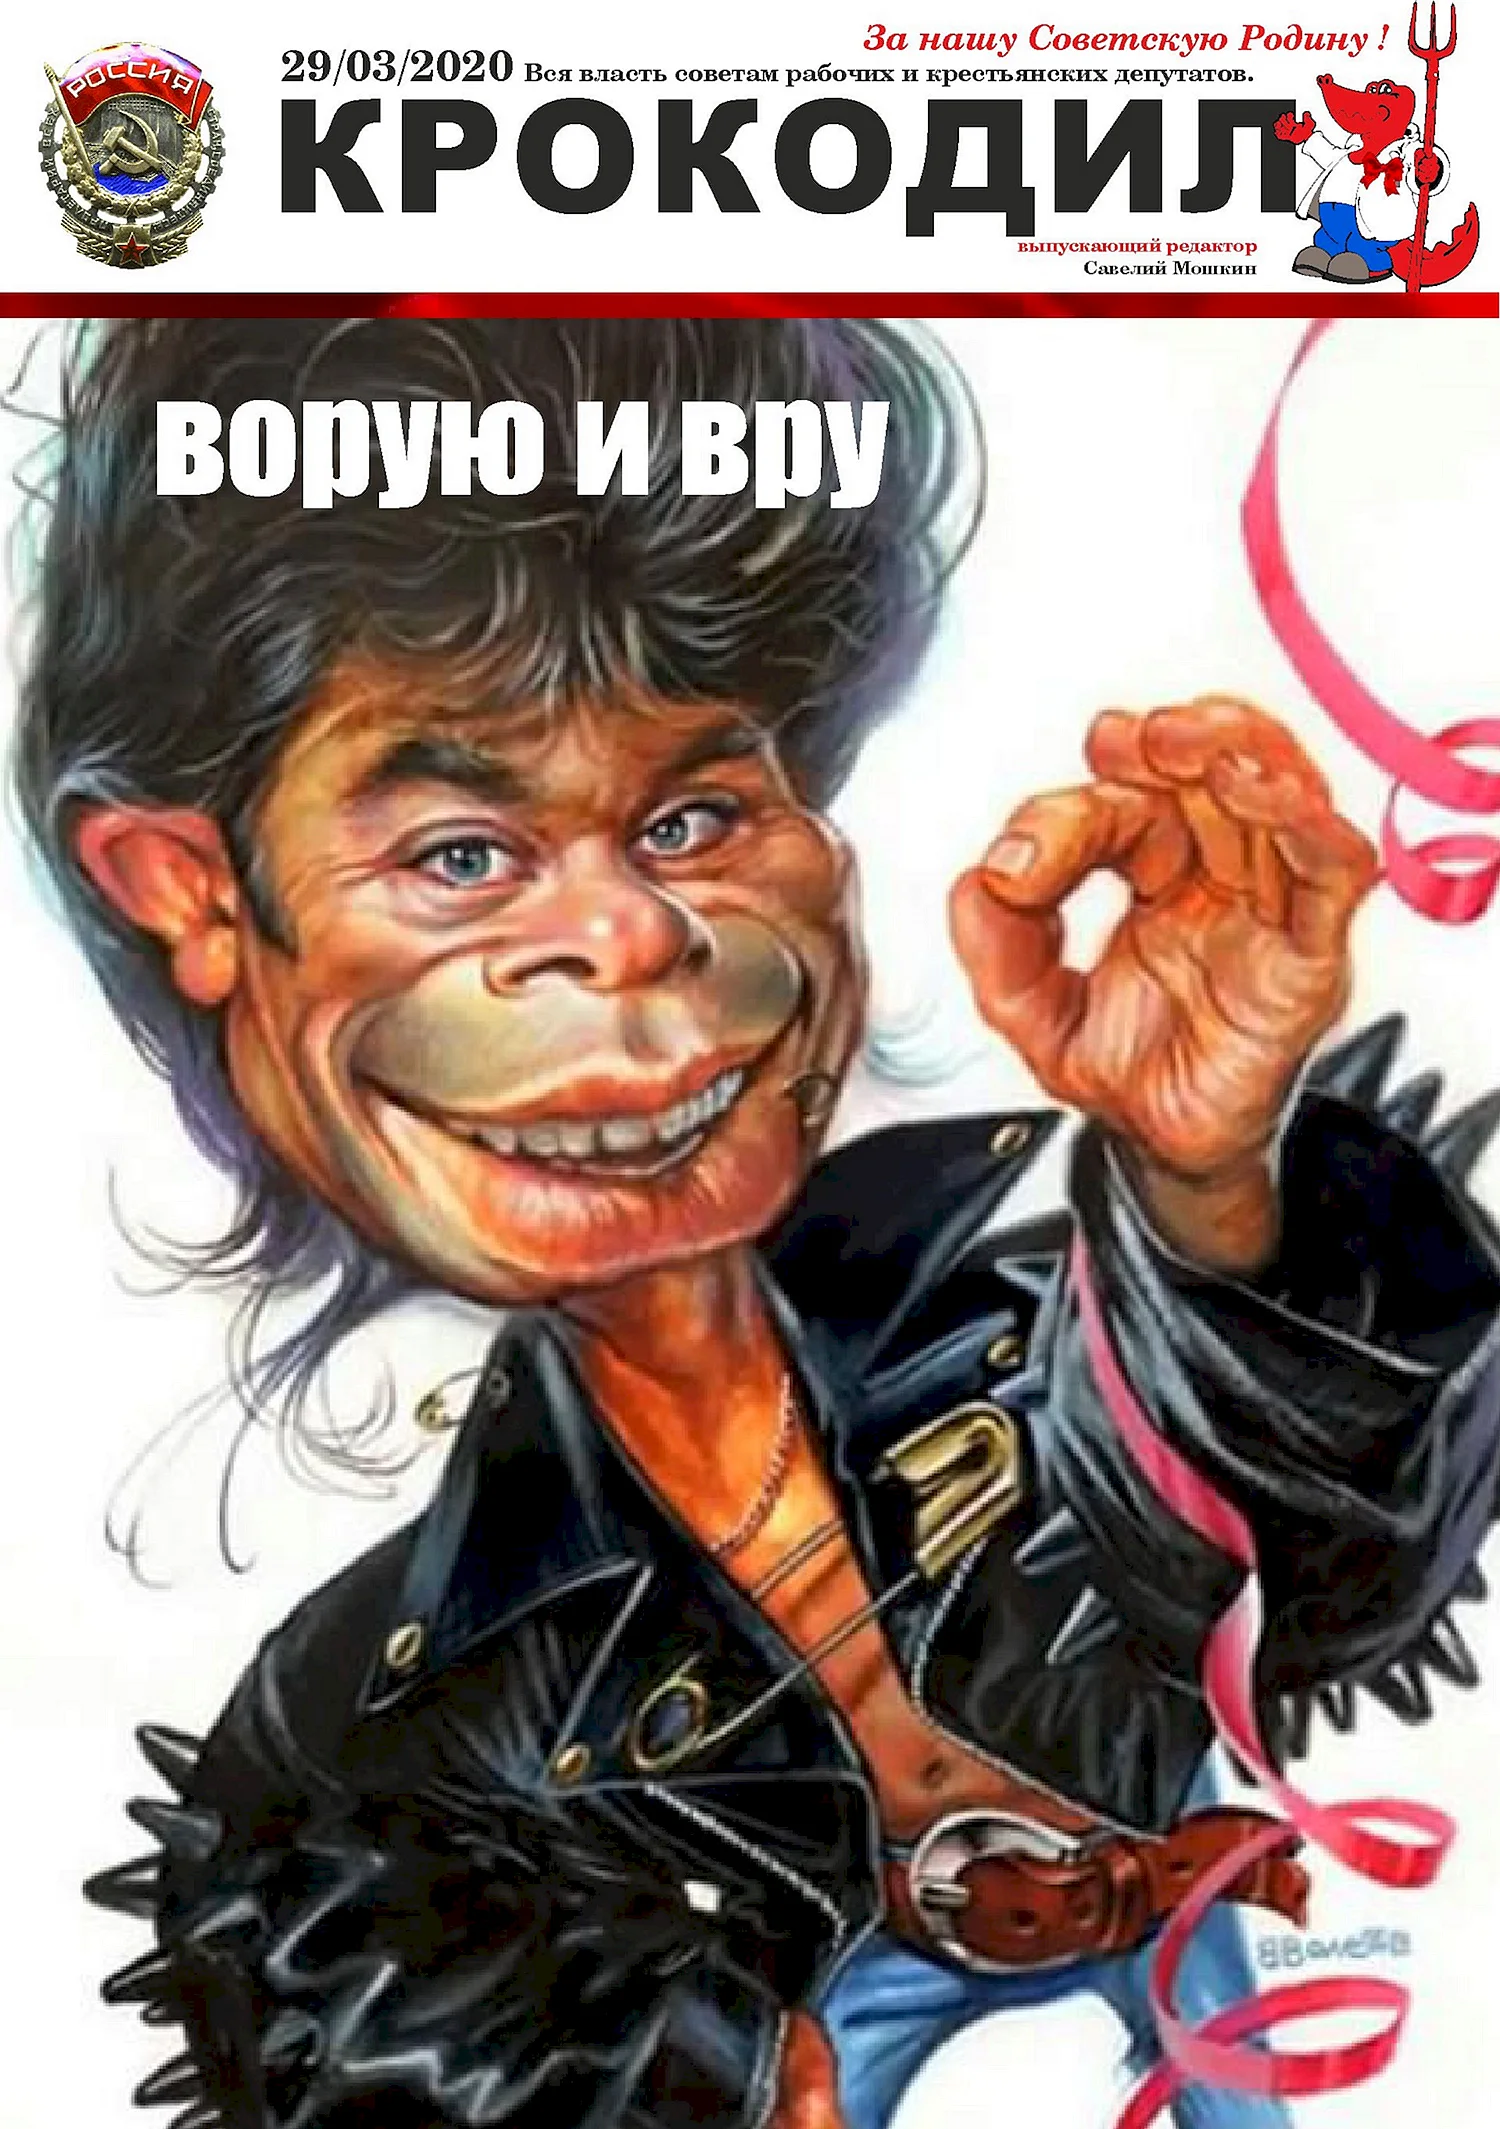 Олег Газманов шарж